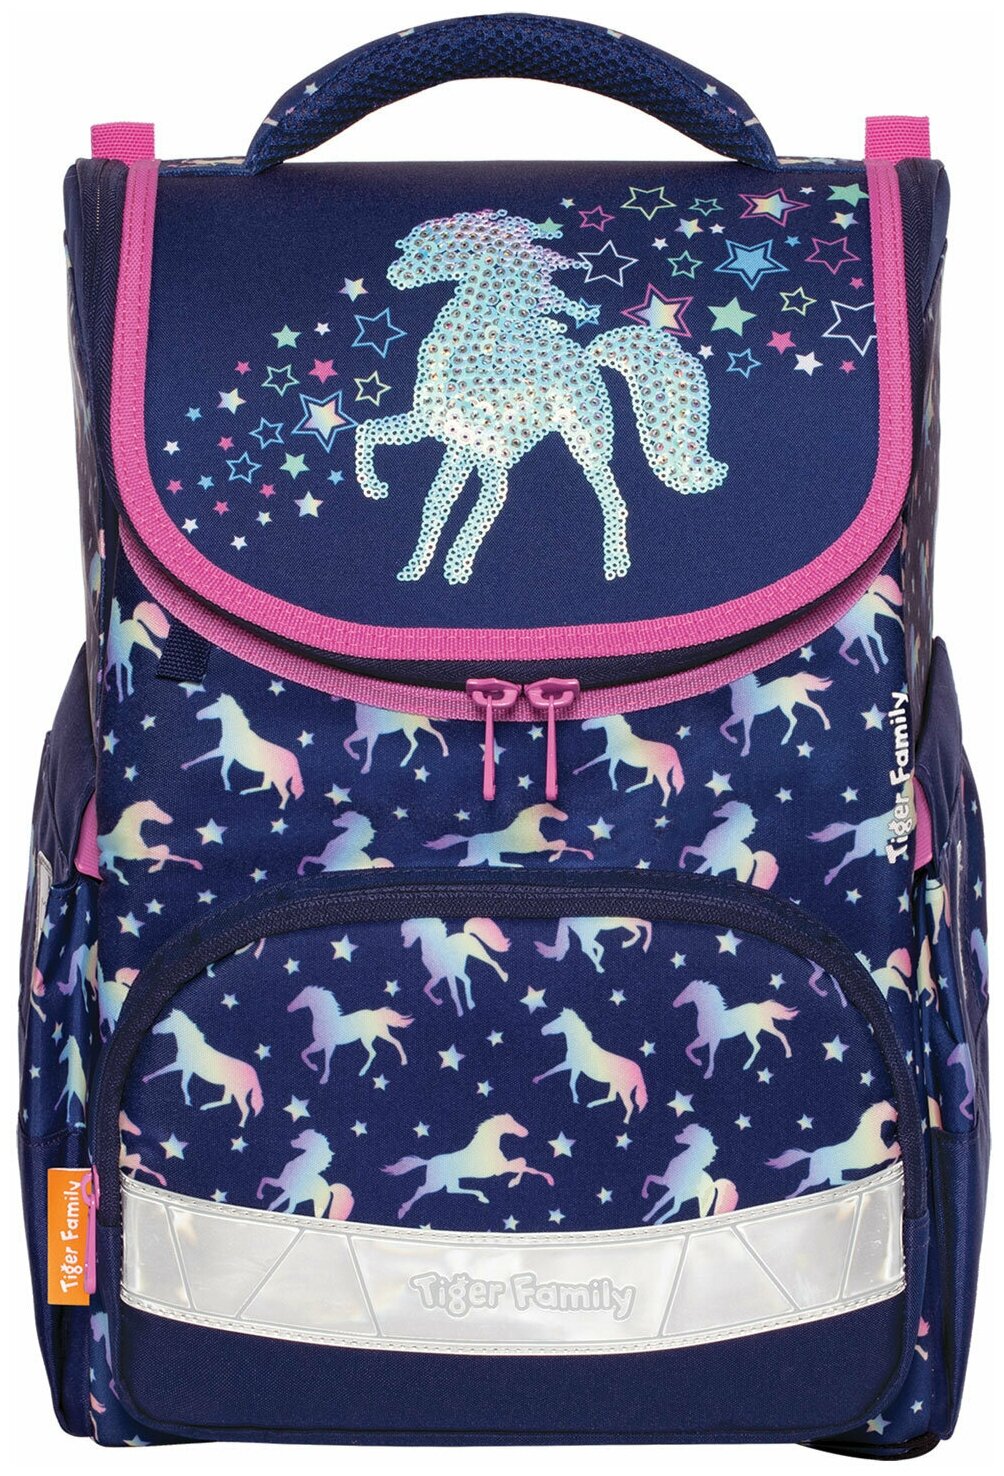 Ранец школьный (рюкзак) Tiger Family для начальной школы, Earnest, "Rainbow Horse", 39х31х23 см (TGET-016A)